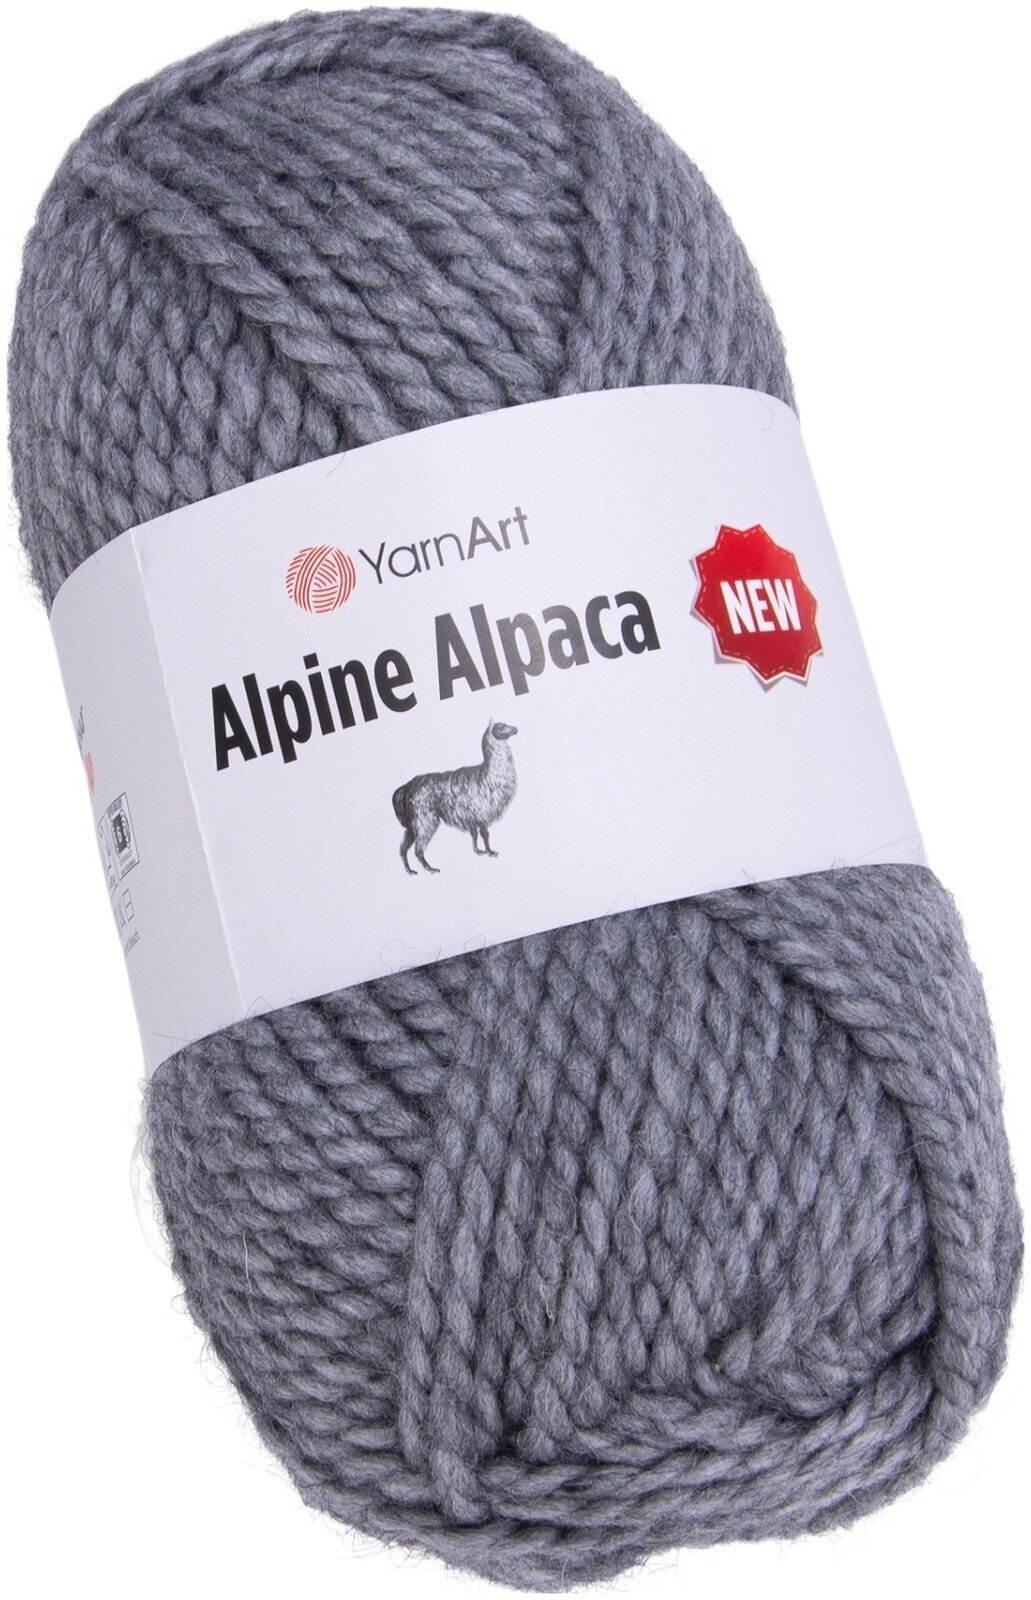 Stickgarn Yarn Art Alpine Alpaca 1447